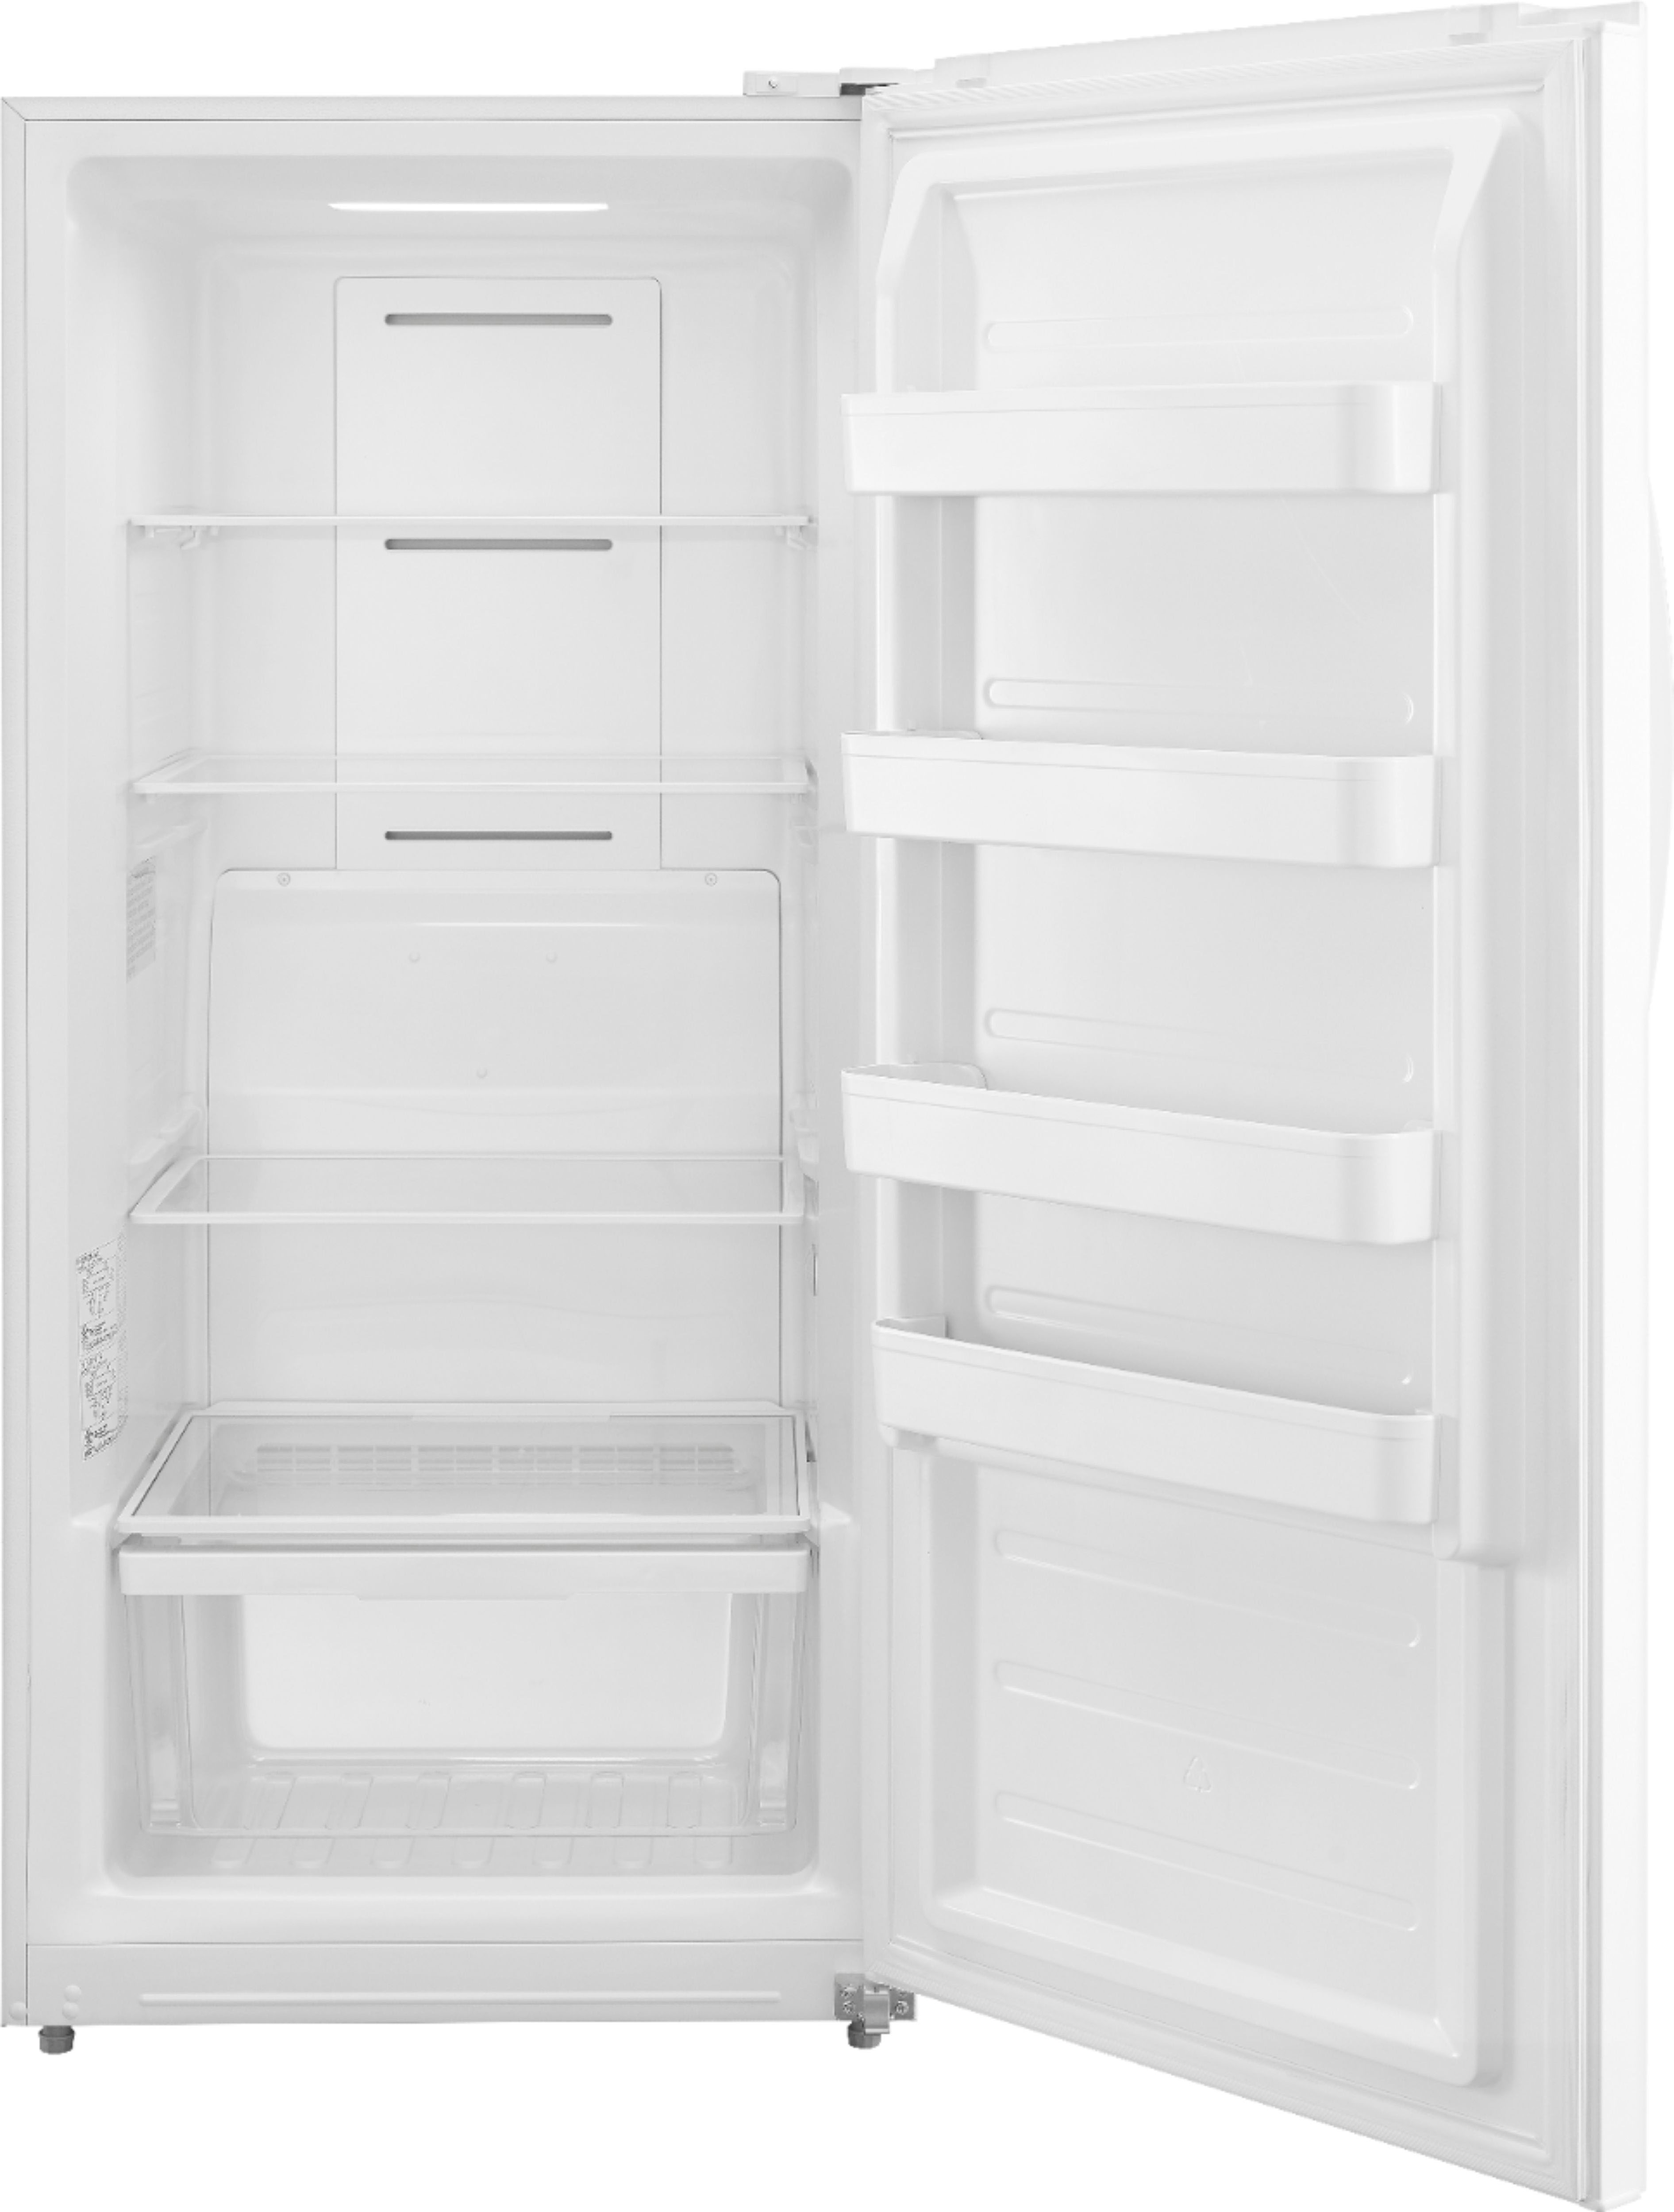 Insignia™ - 7 Cu. Ft. Upright Freezer - White - Lambrecht Auction